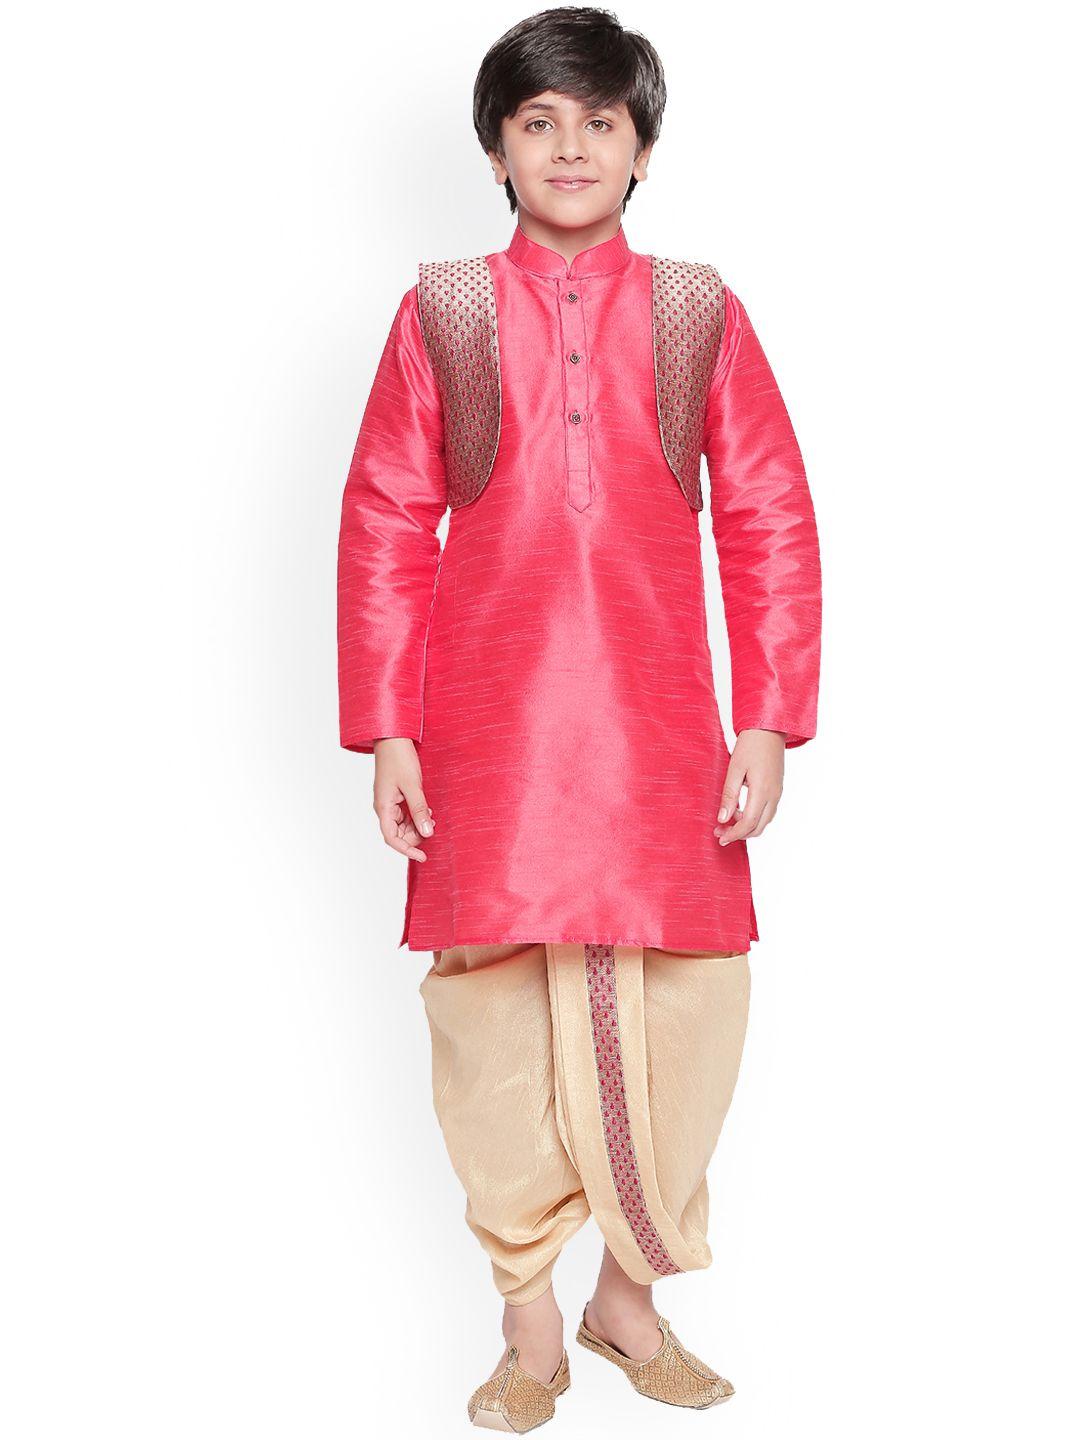 jeetethnics boys pink & gold-toned self design kurta set with jacket